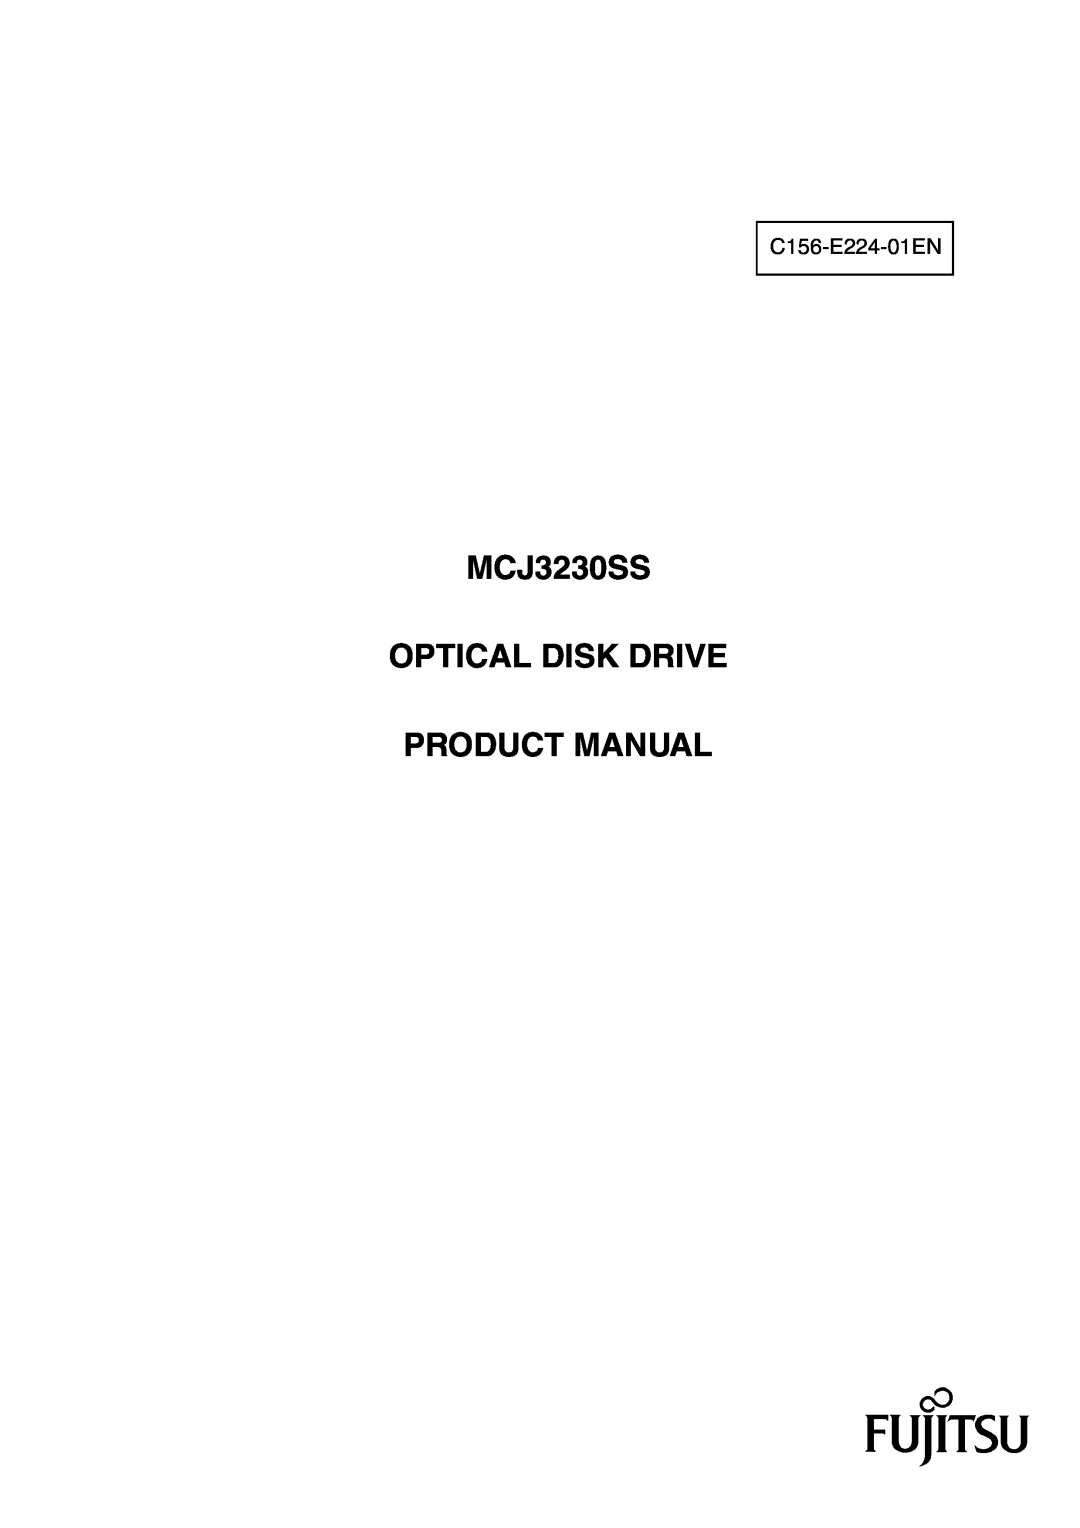 Fujitsu manual MCJ3230SS OPTICAL DISK DRIVE PRODUCT MANUAL, C156-E224-01EN 